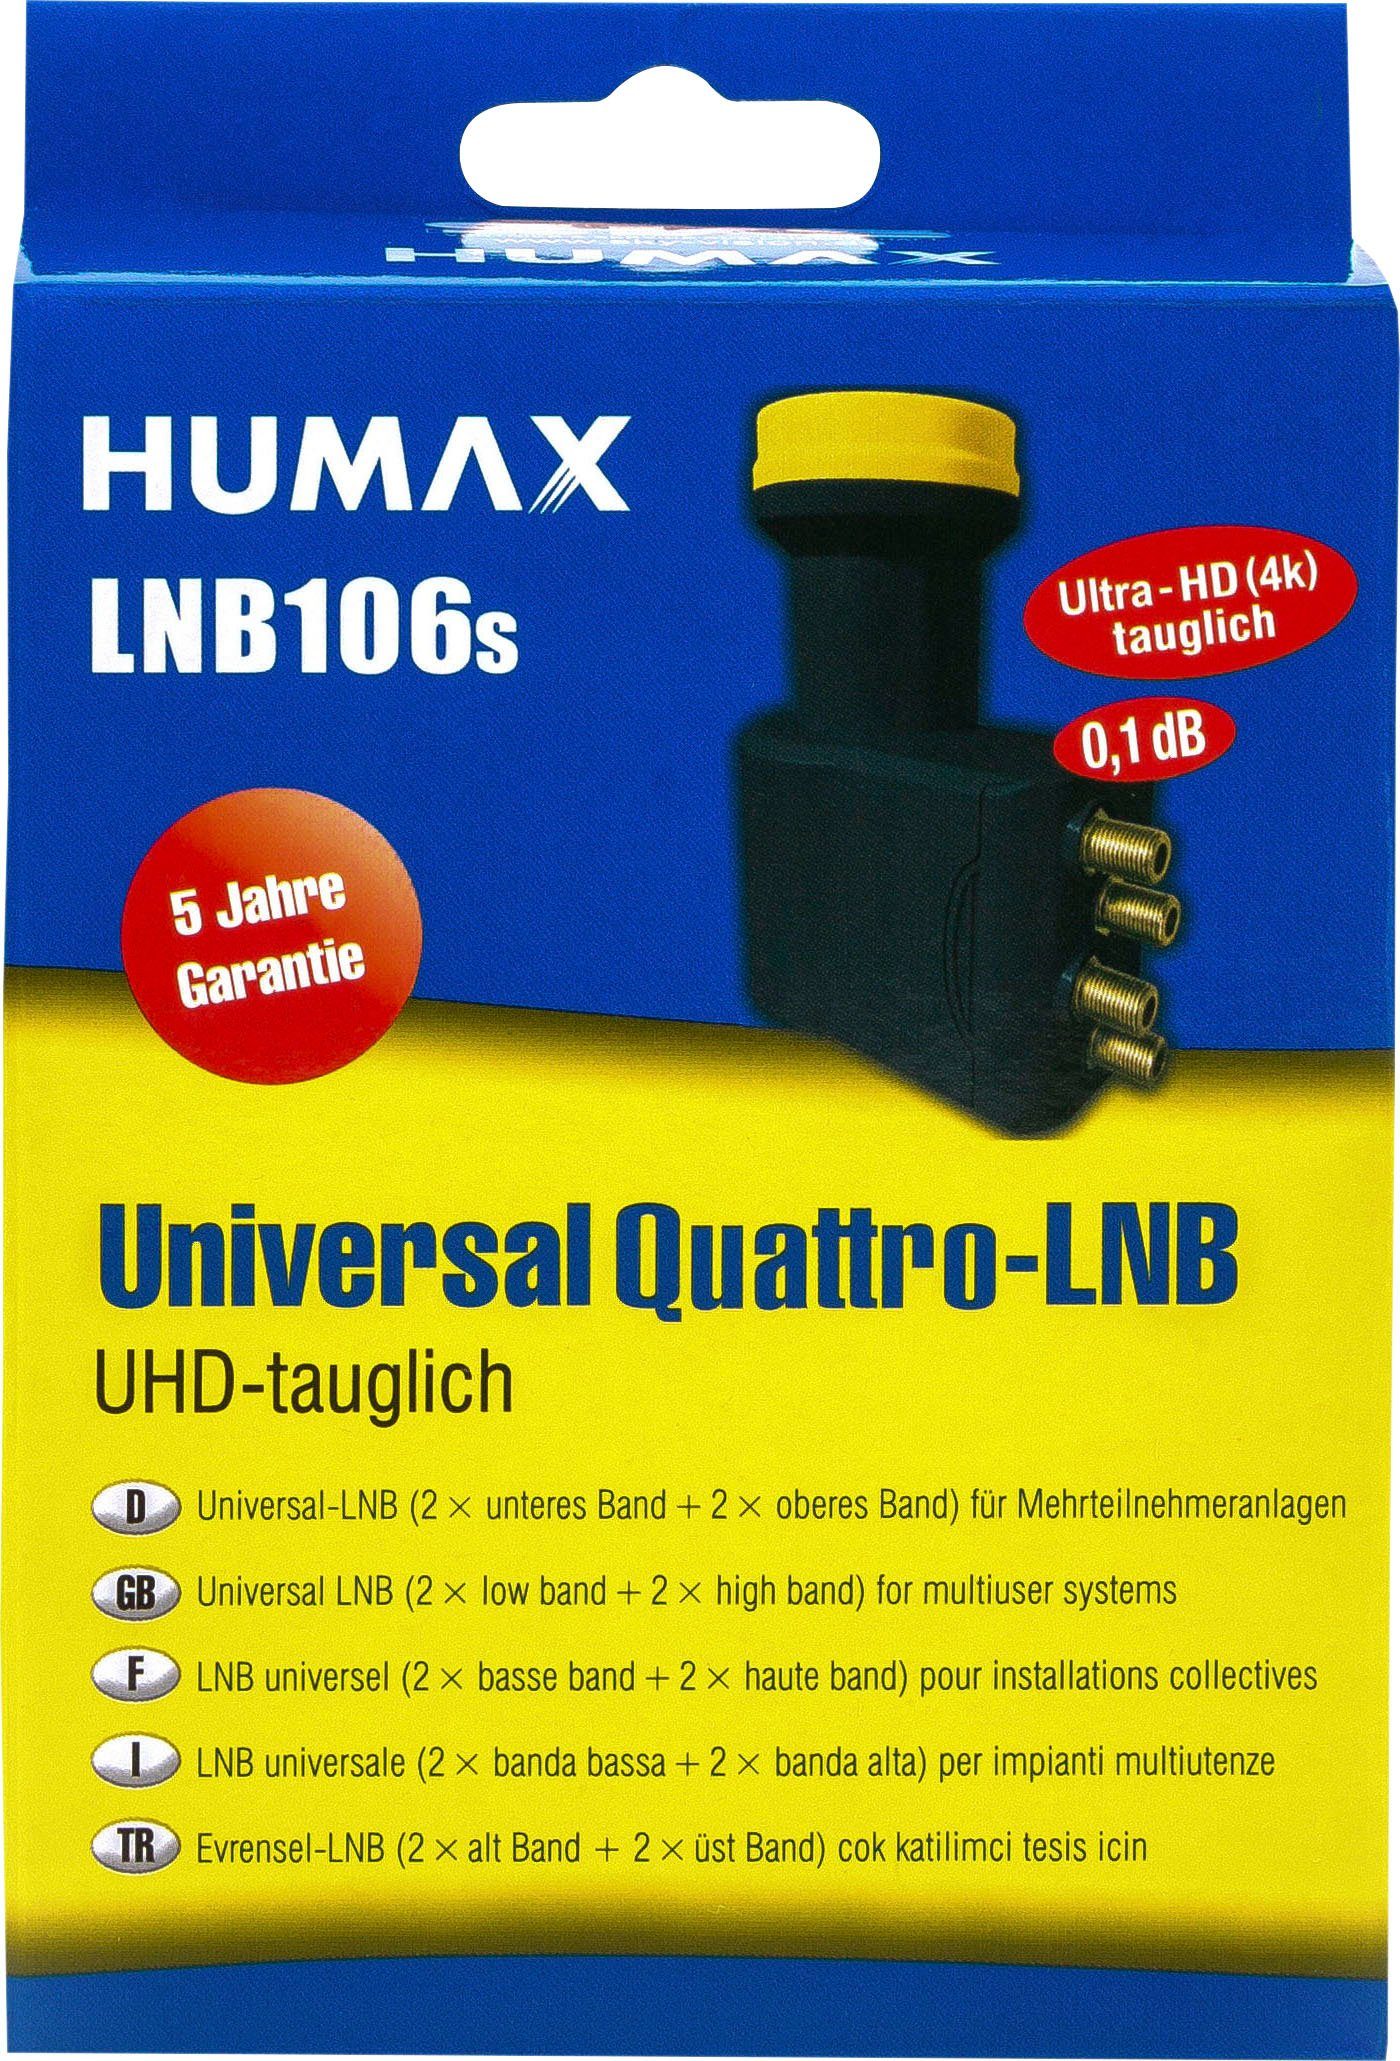 LNB 106s LNB Humax Universal SAT-Antenne Quattro Gold